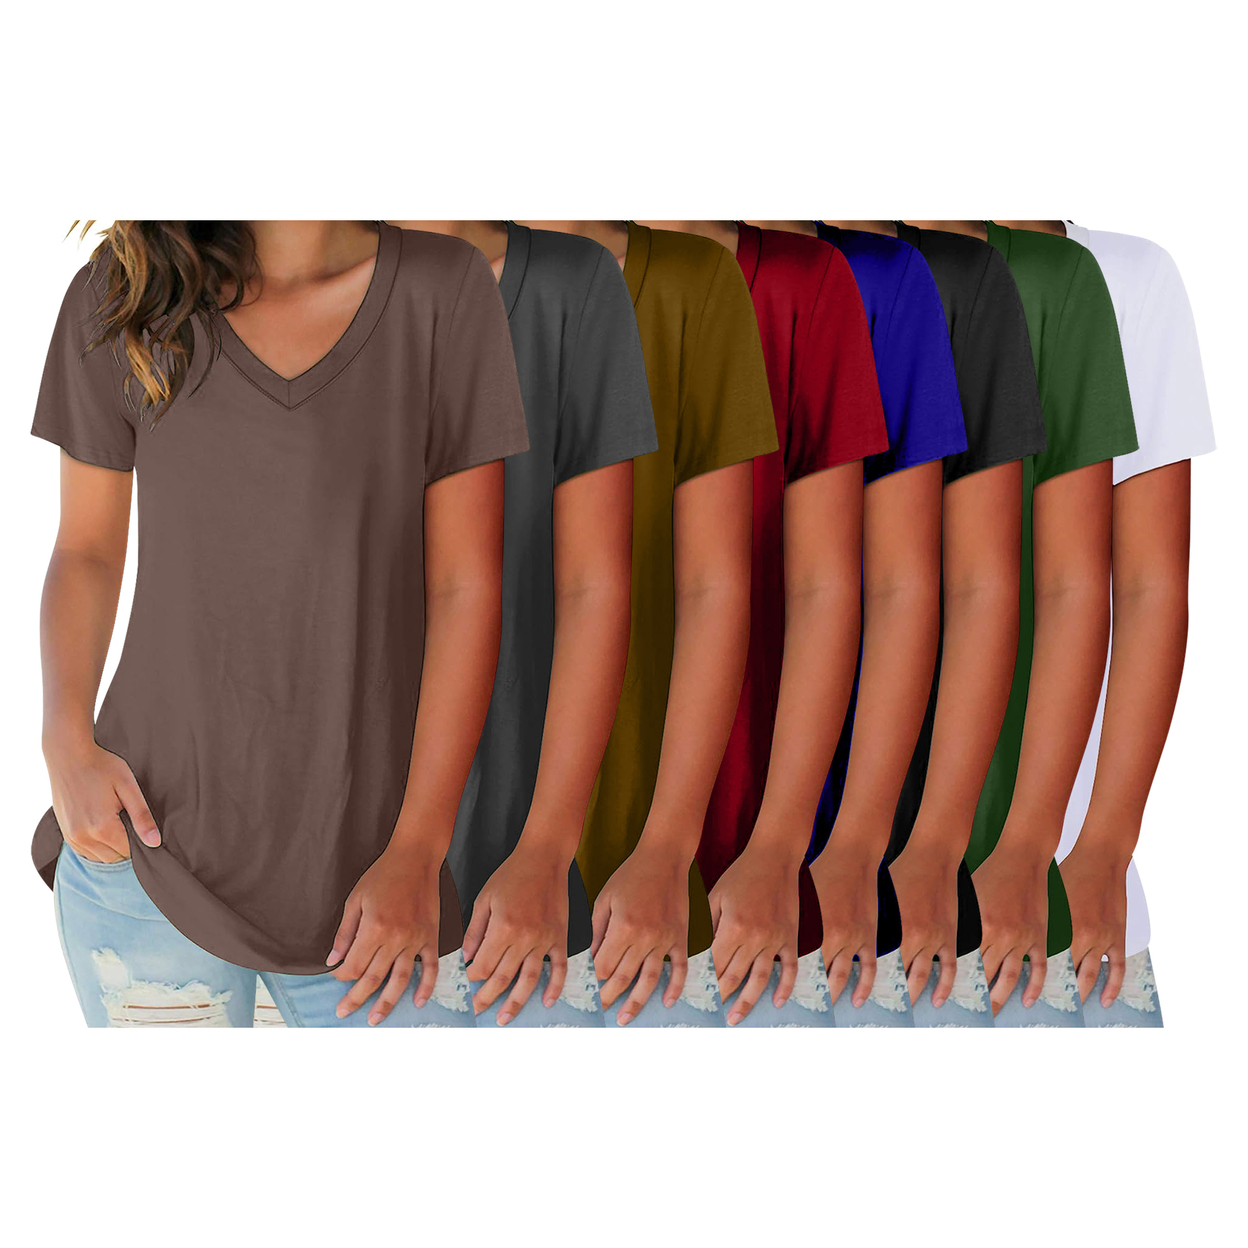 2-Pack: Women's Ultra Soft Smooth Cotton Blend Basic V-Neck Short Sleeve Shirts - Black & Brown, Medium